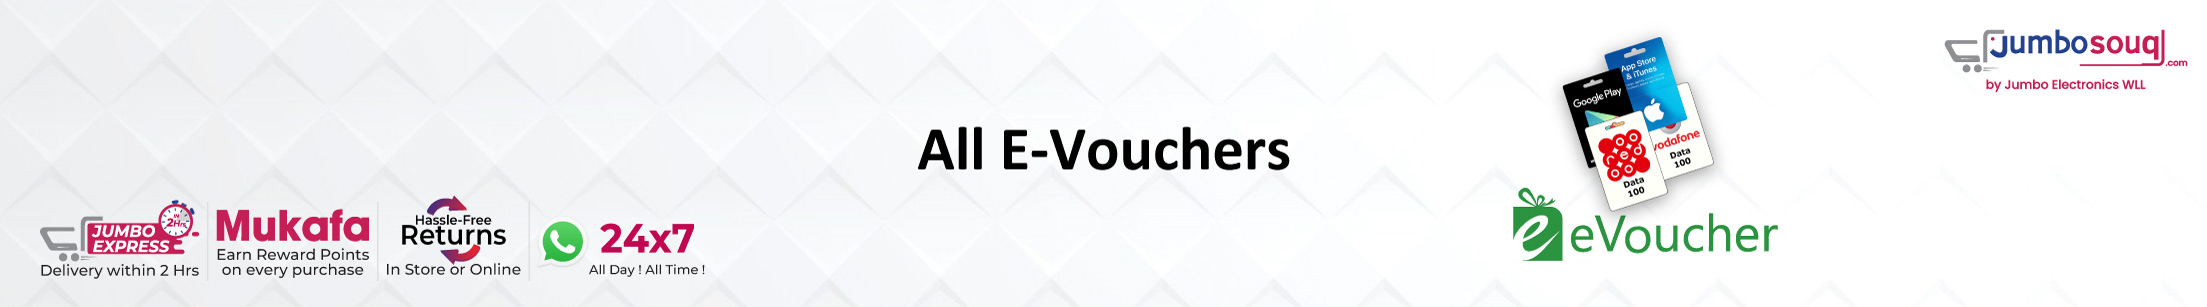 All E-Vouchers